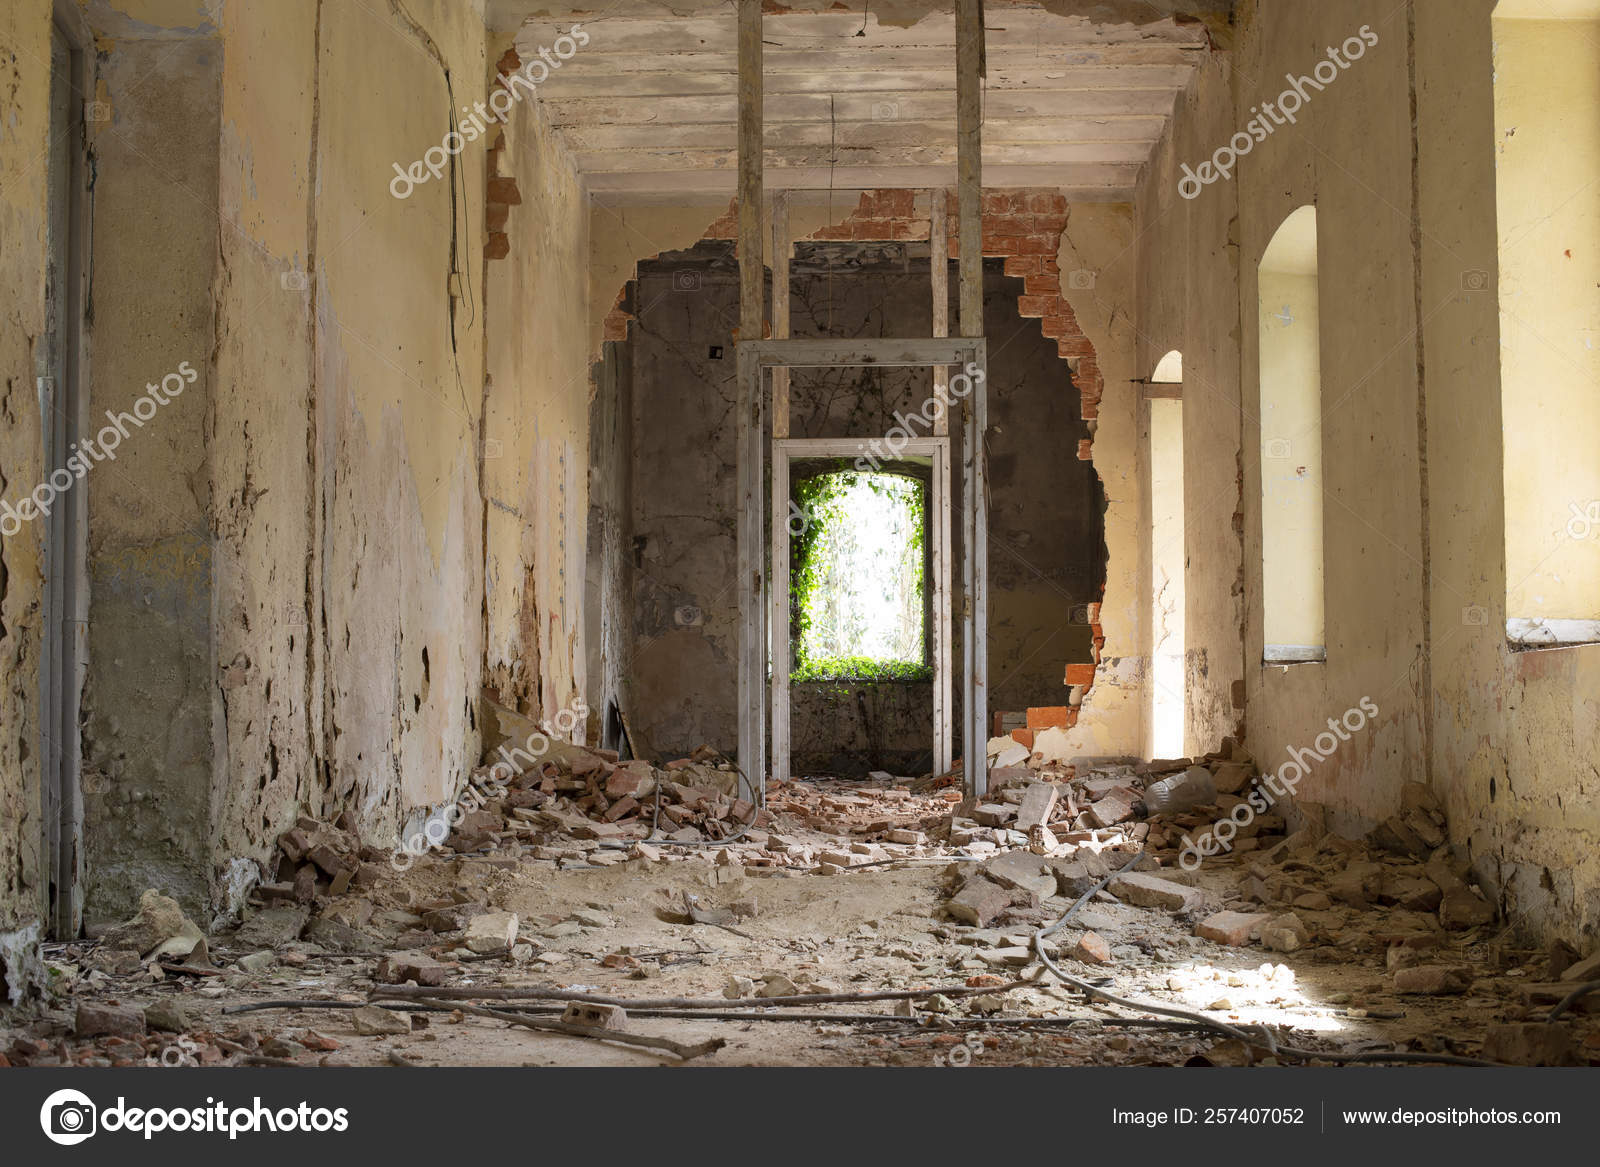 Abandoned Old House Background Stock Photo by ©paulasierra 257407052